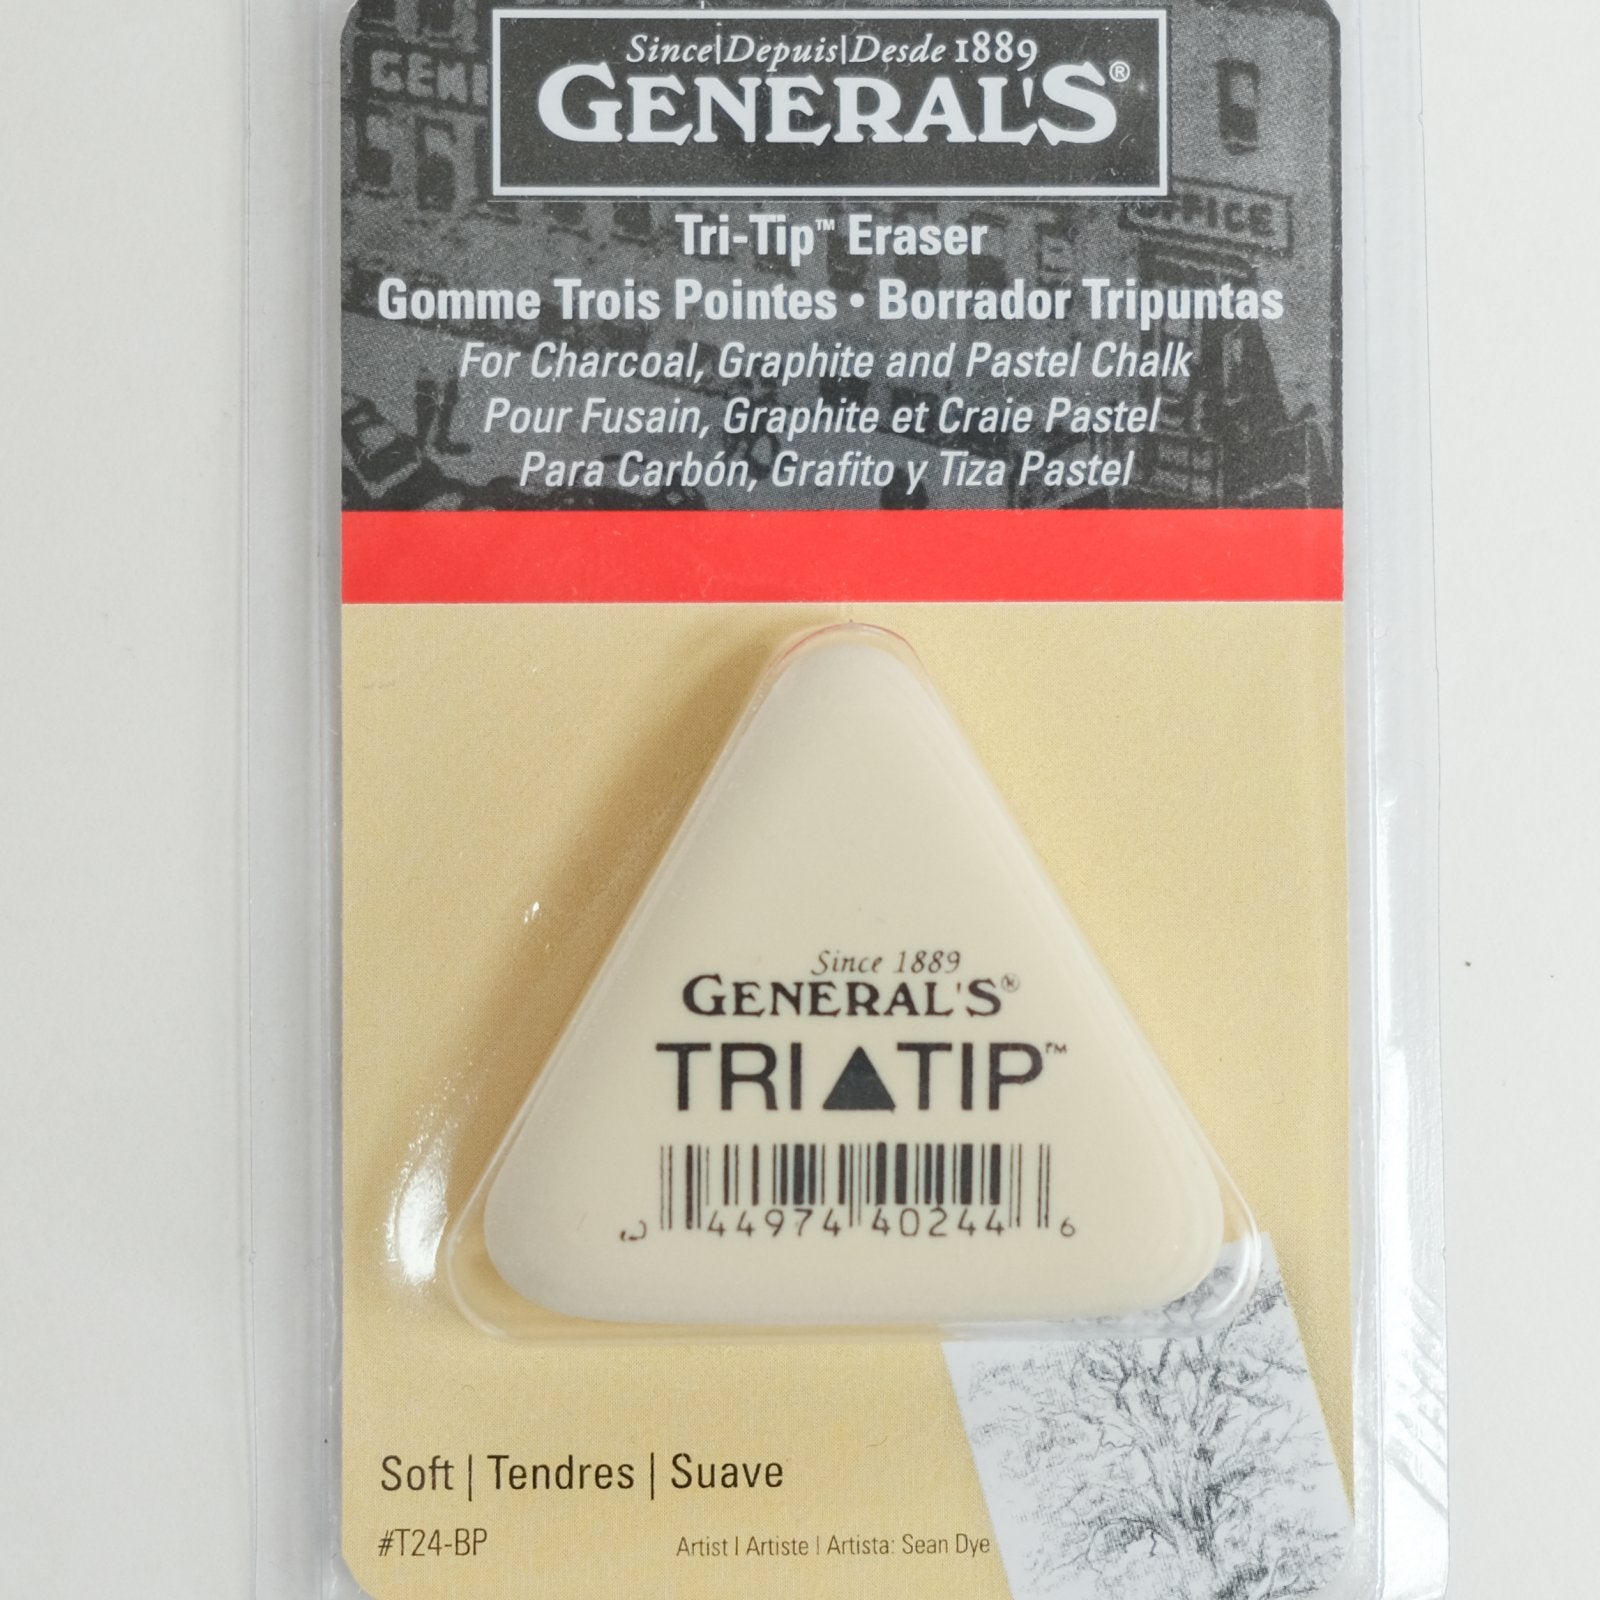 Tri-Tip Eraser by General's